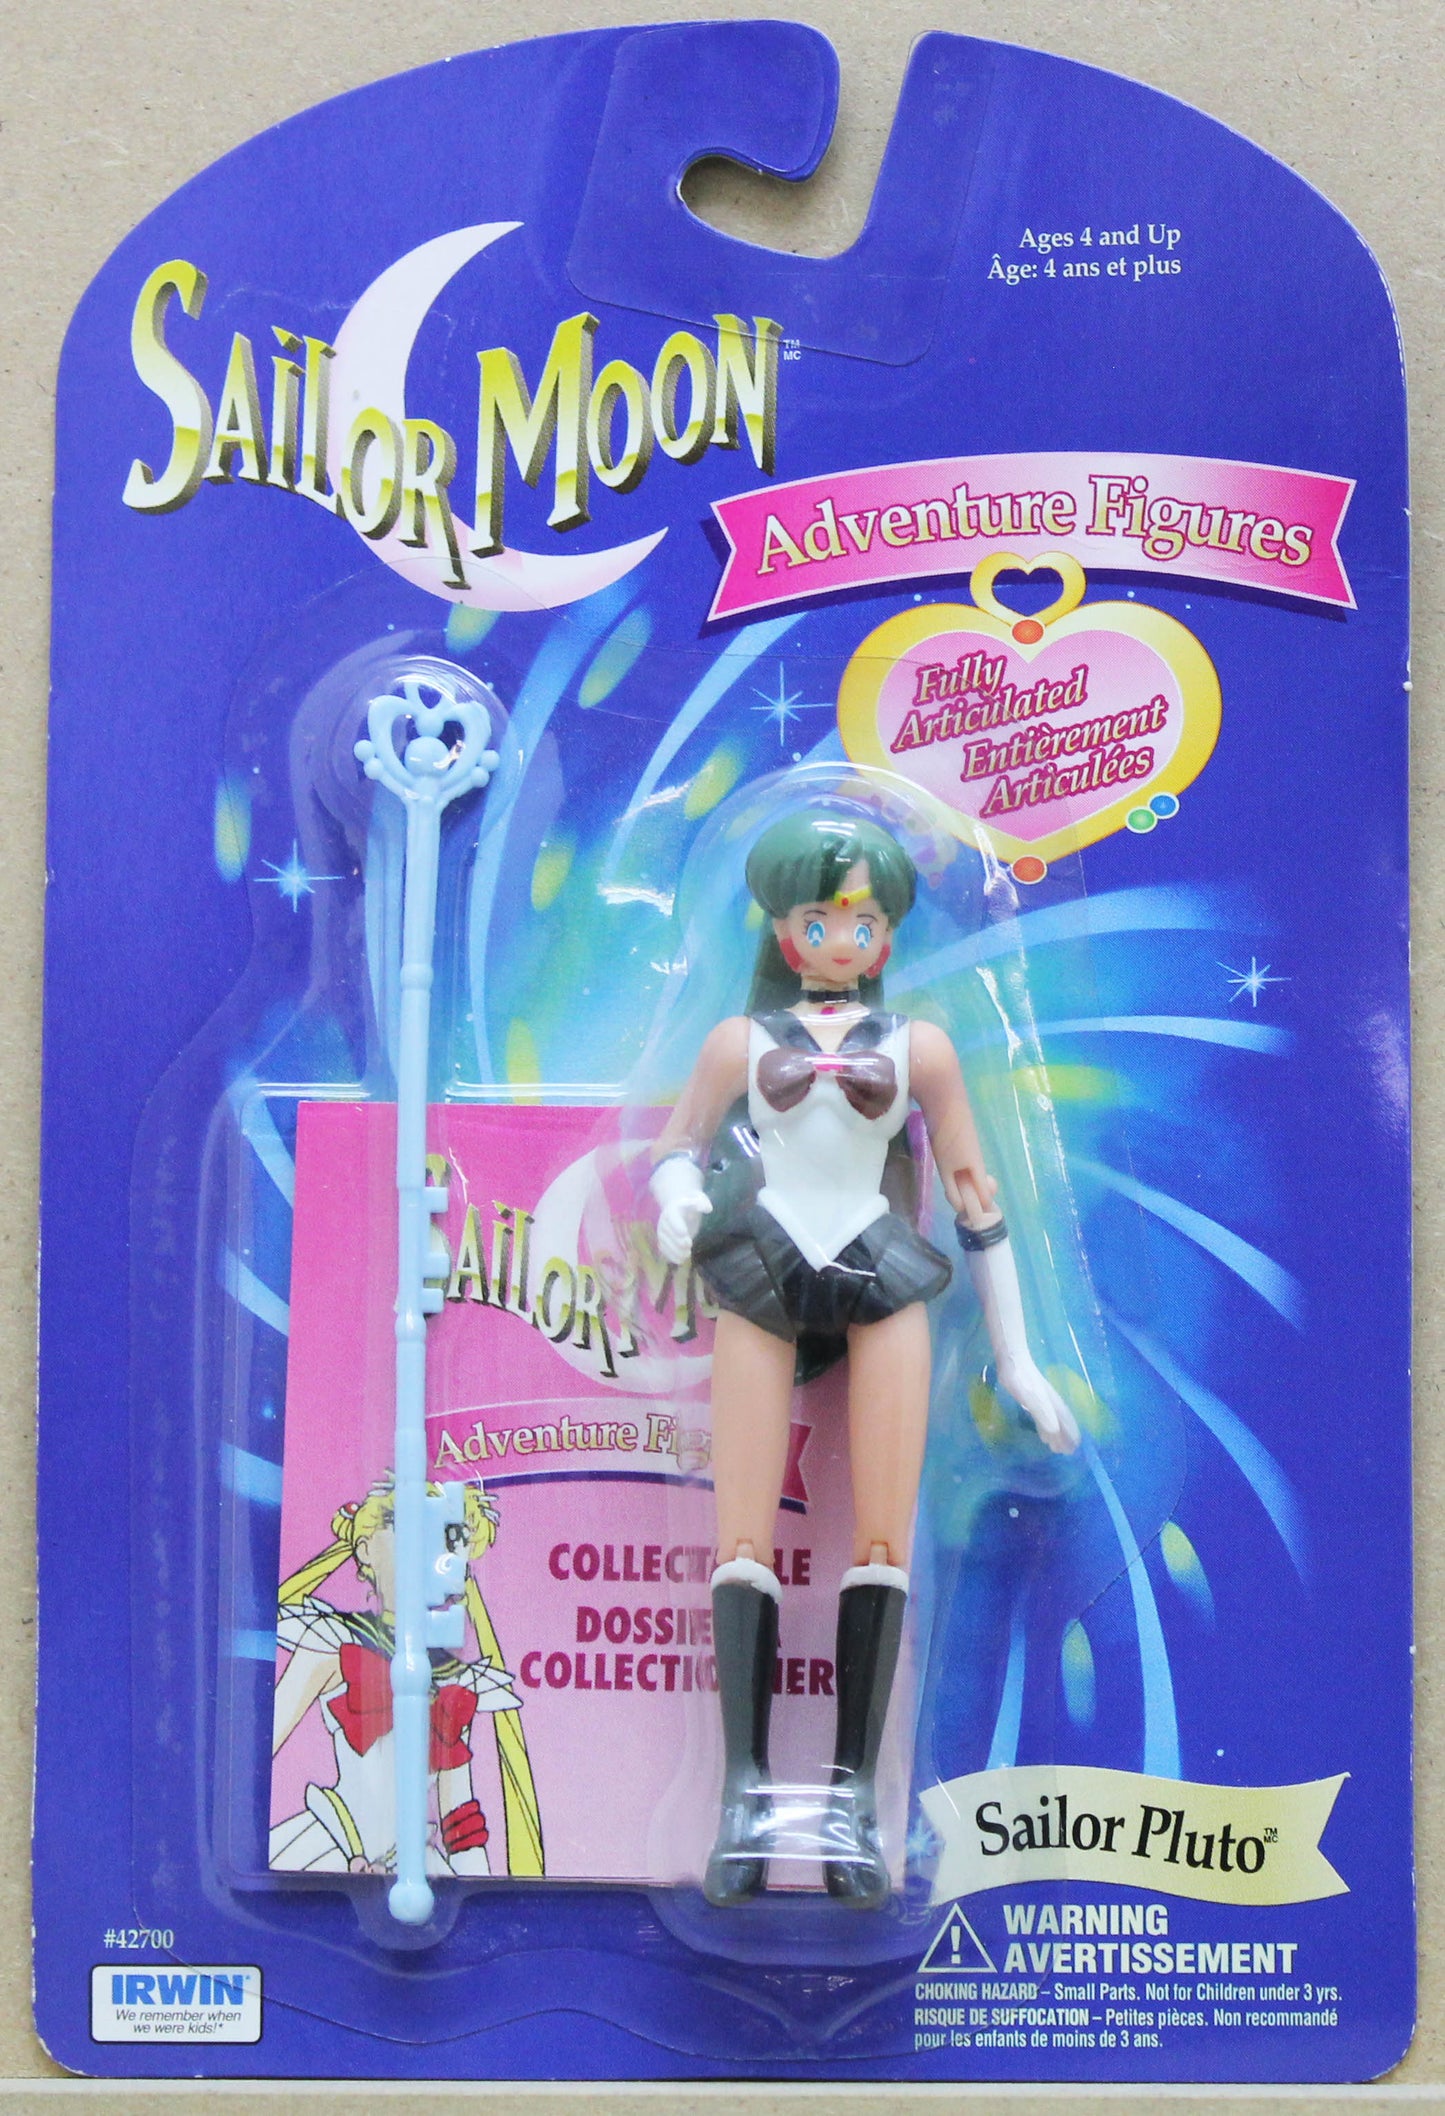 Sailor Moon Adventure Figures (1998)